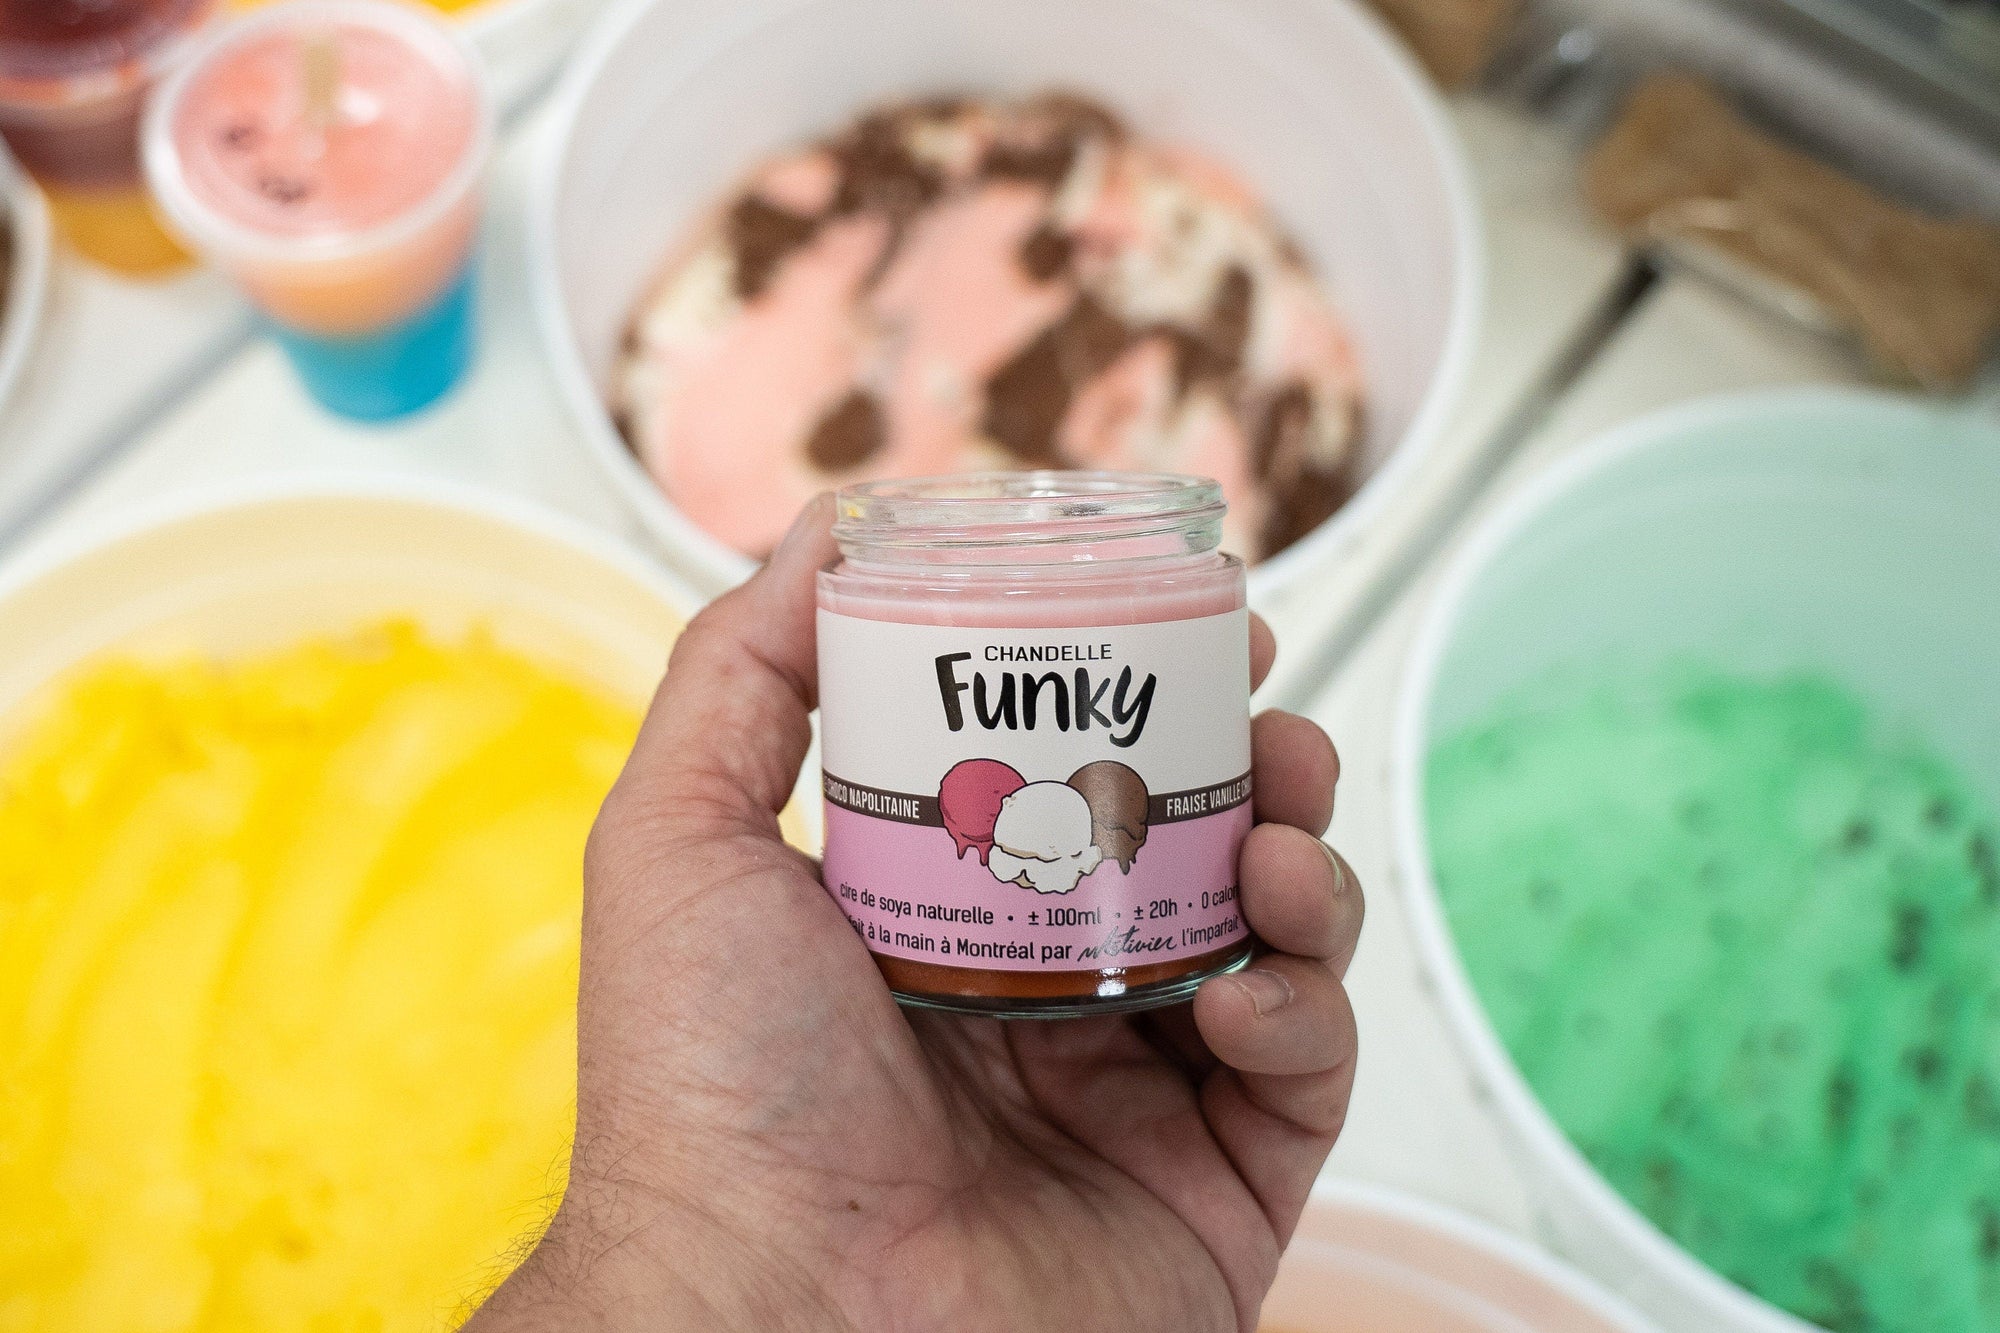 Chandelle Crème glacée - Funky - Funky & Co.